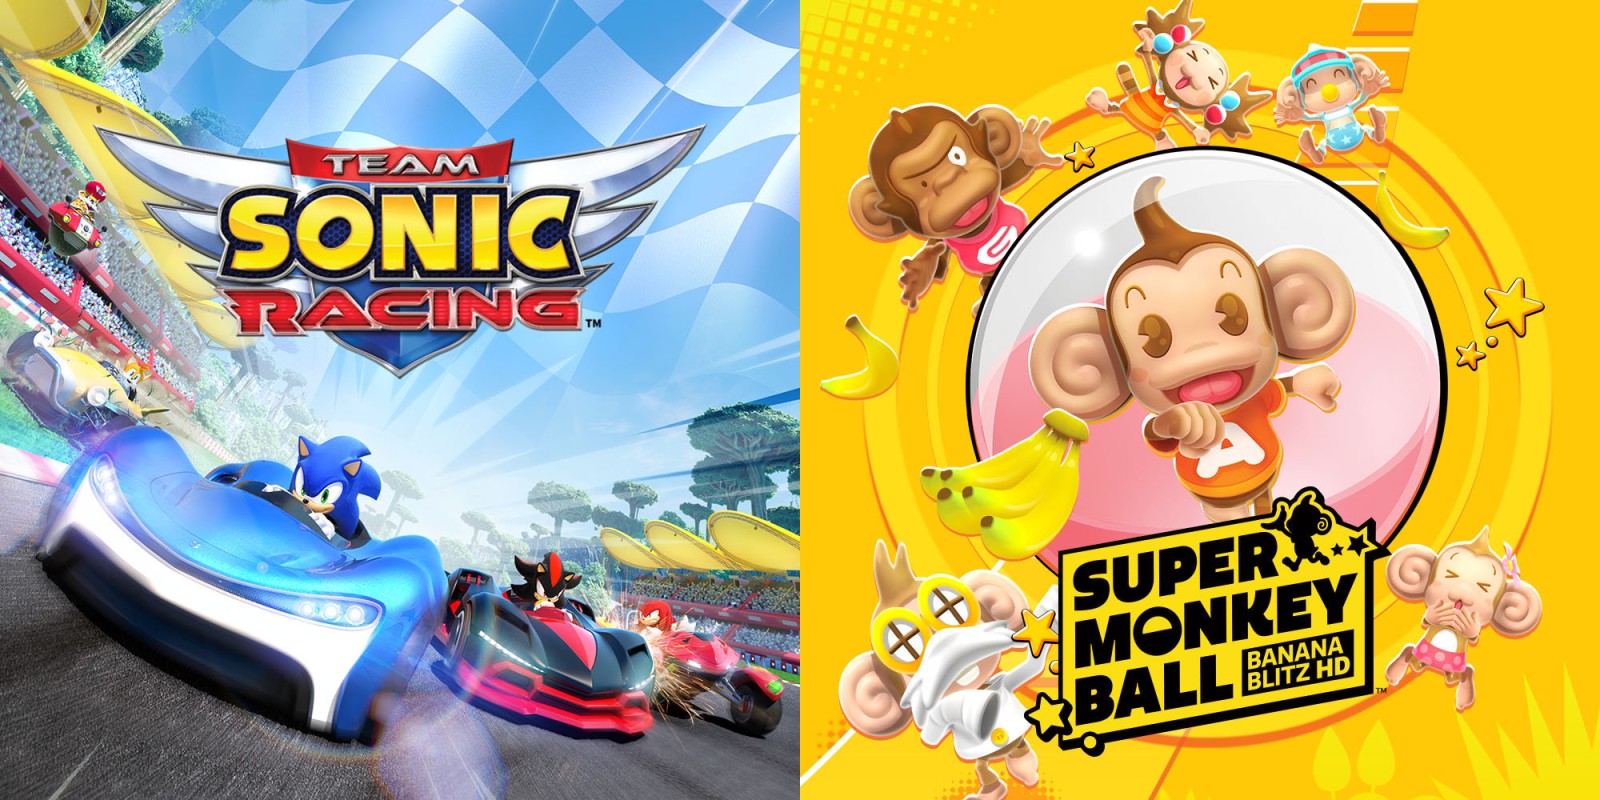 Team Sonic Racing & Super Monkey Ball: Banana Blitz HD | Nintendo Switch  download software | Games | Nintendo